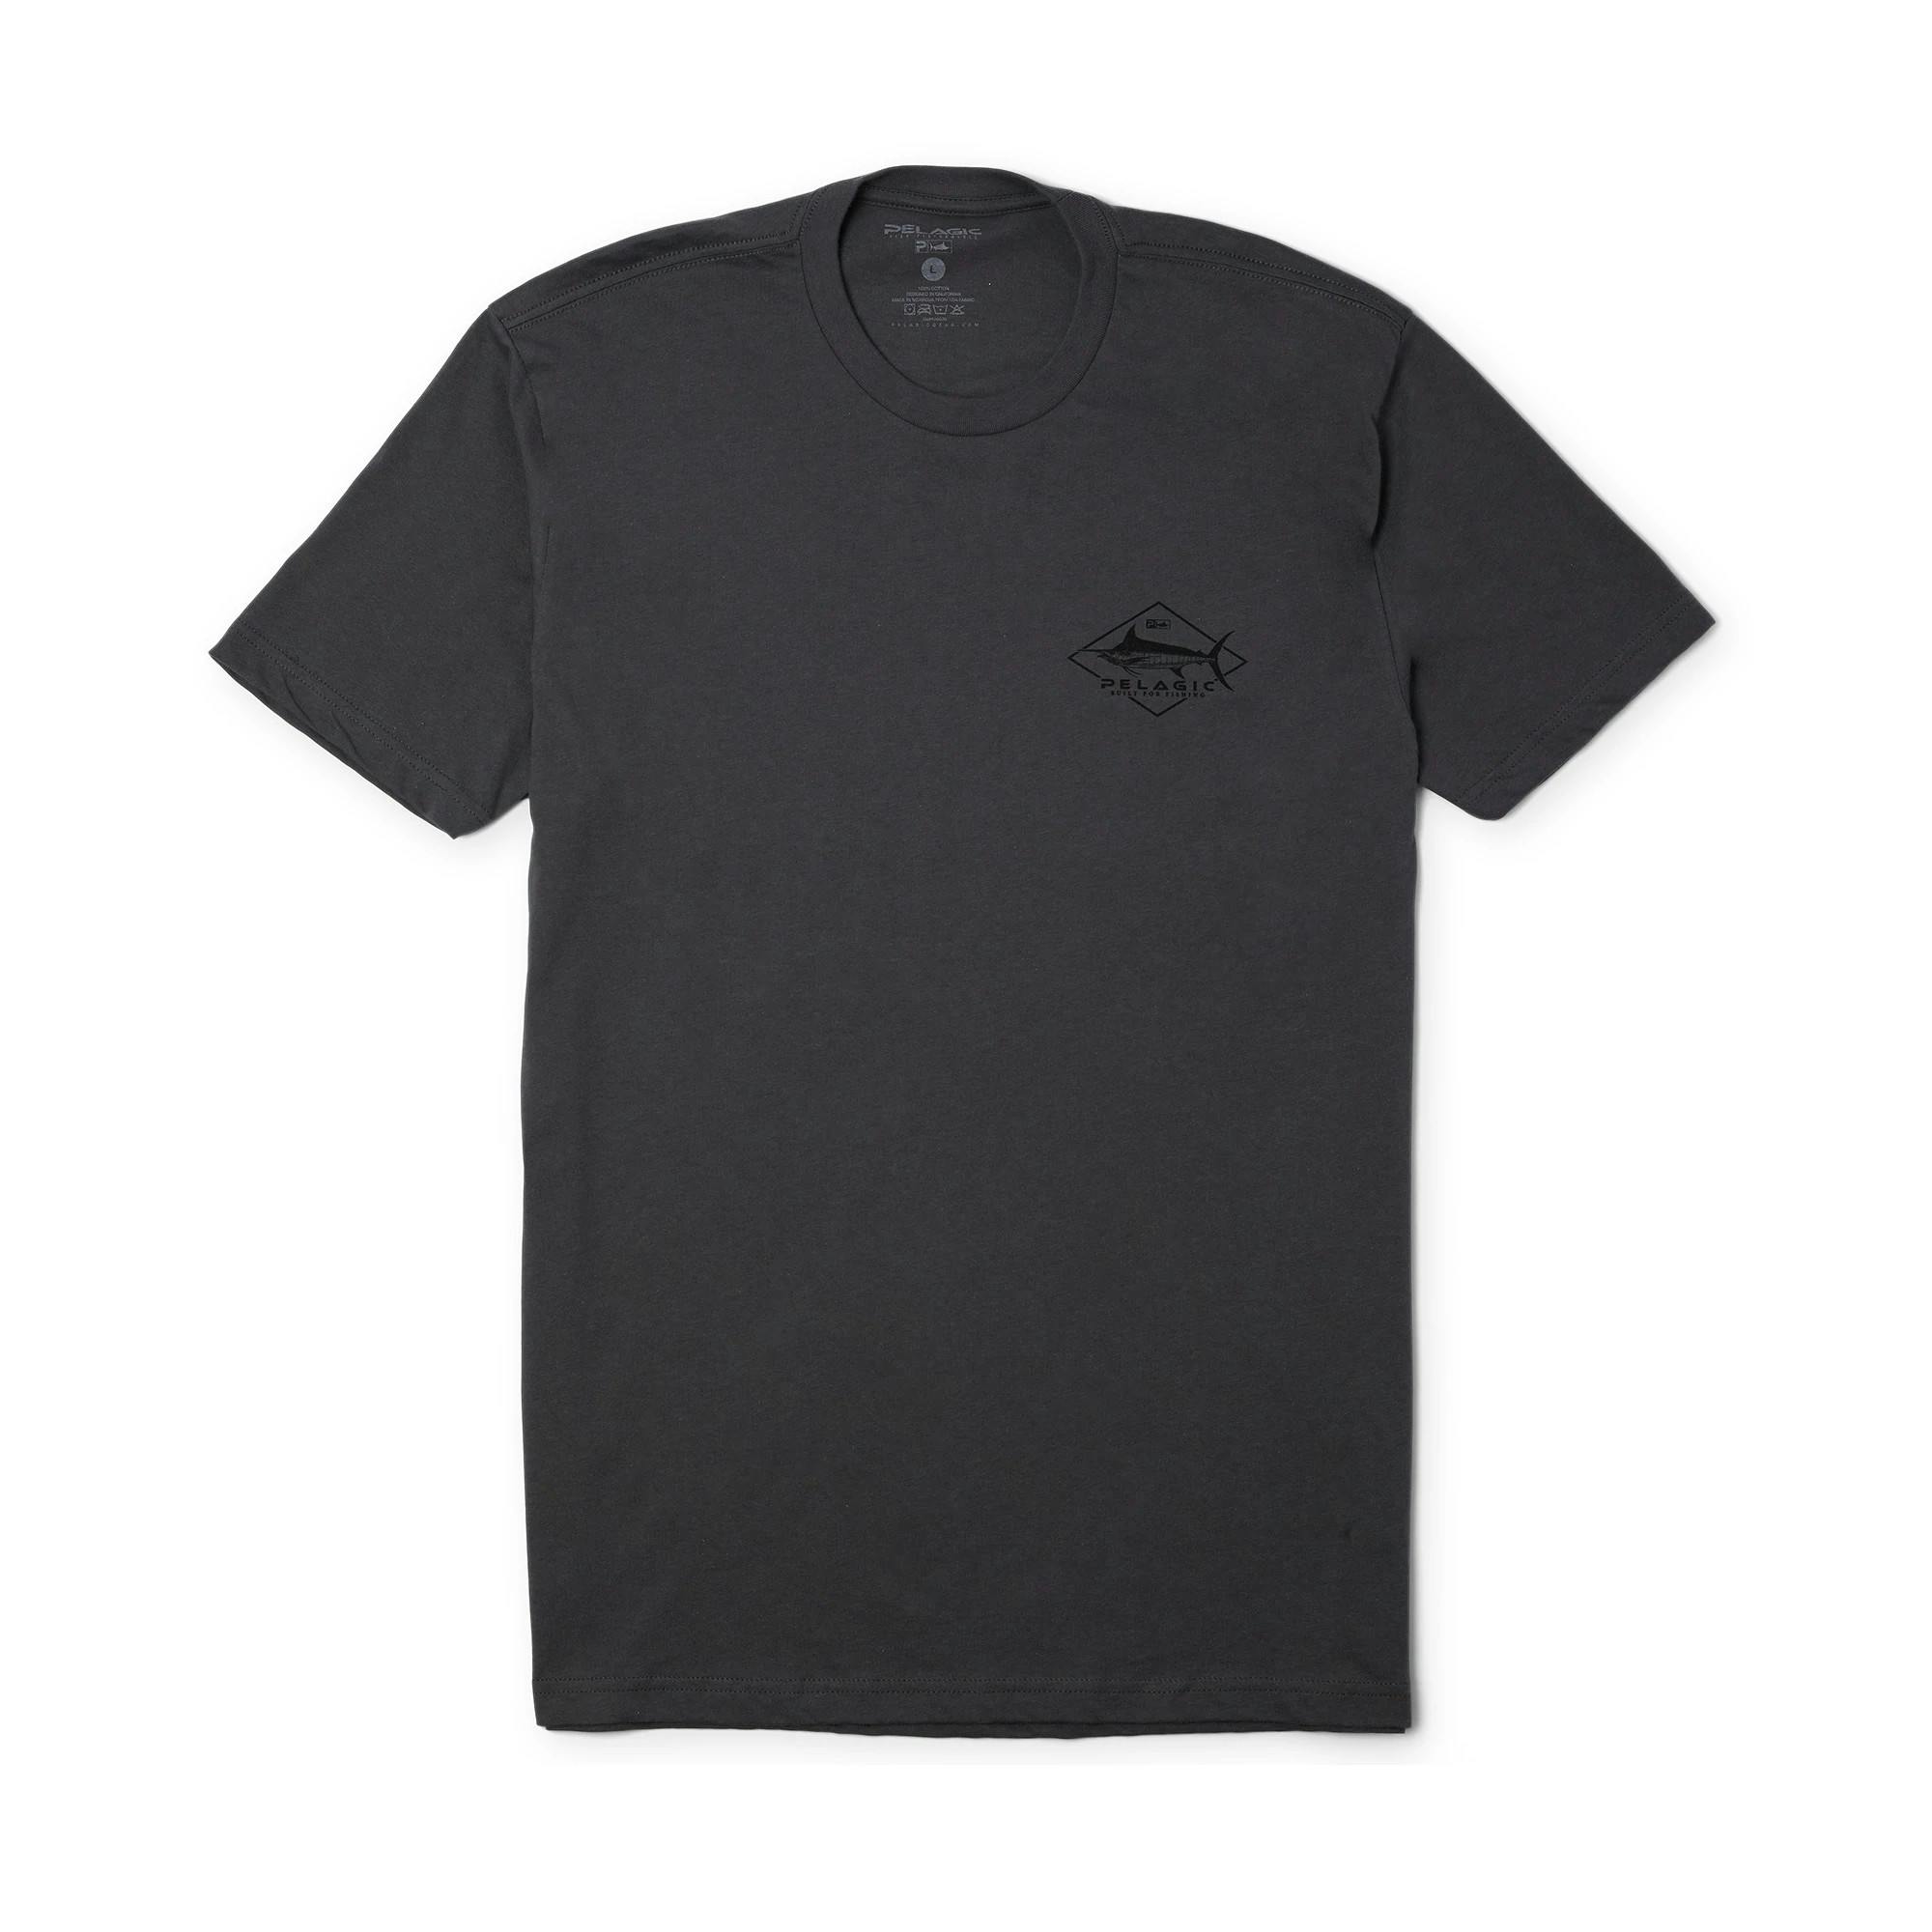 Pelagic Heavy Gear Premium Fishing T-Shirt Front - Charcoal